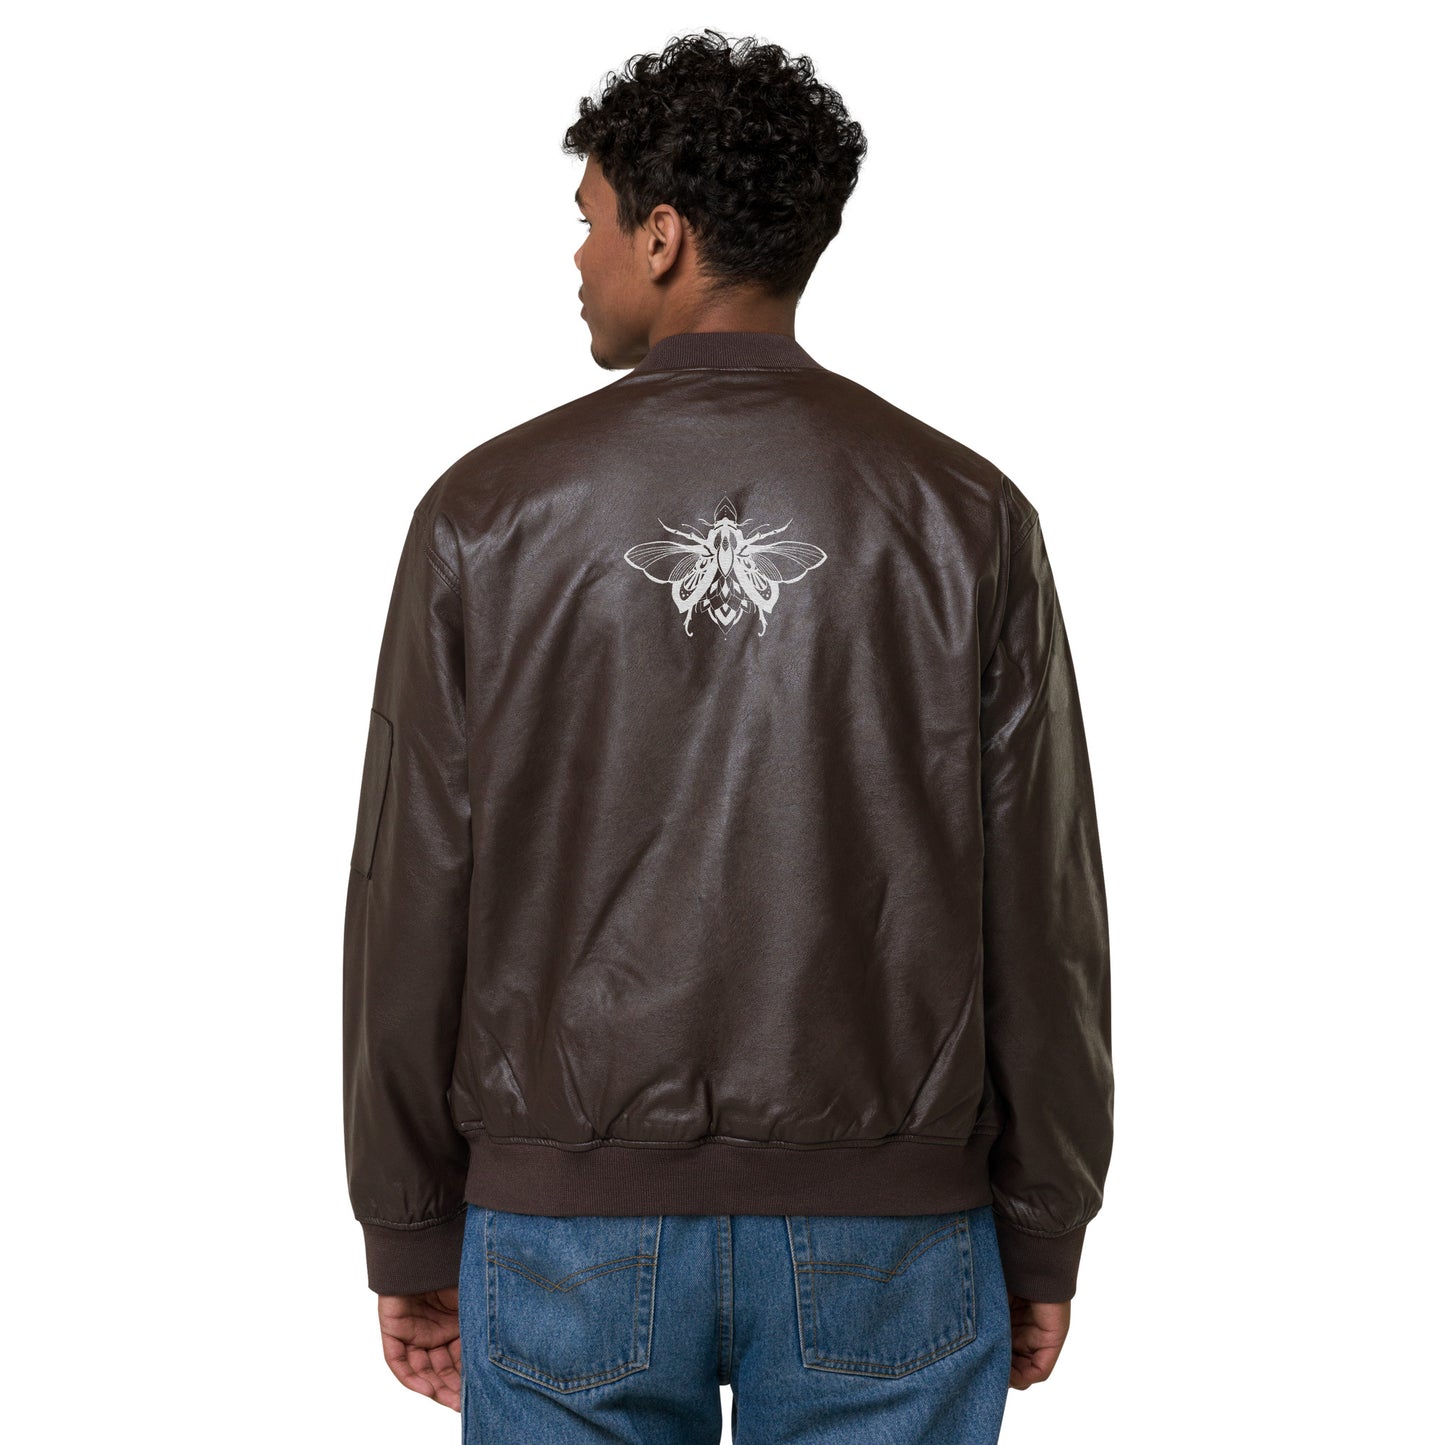 Unisex faux Leather DDG bug embroidered Bomber Jacket